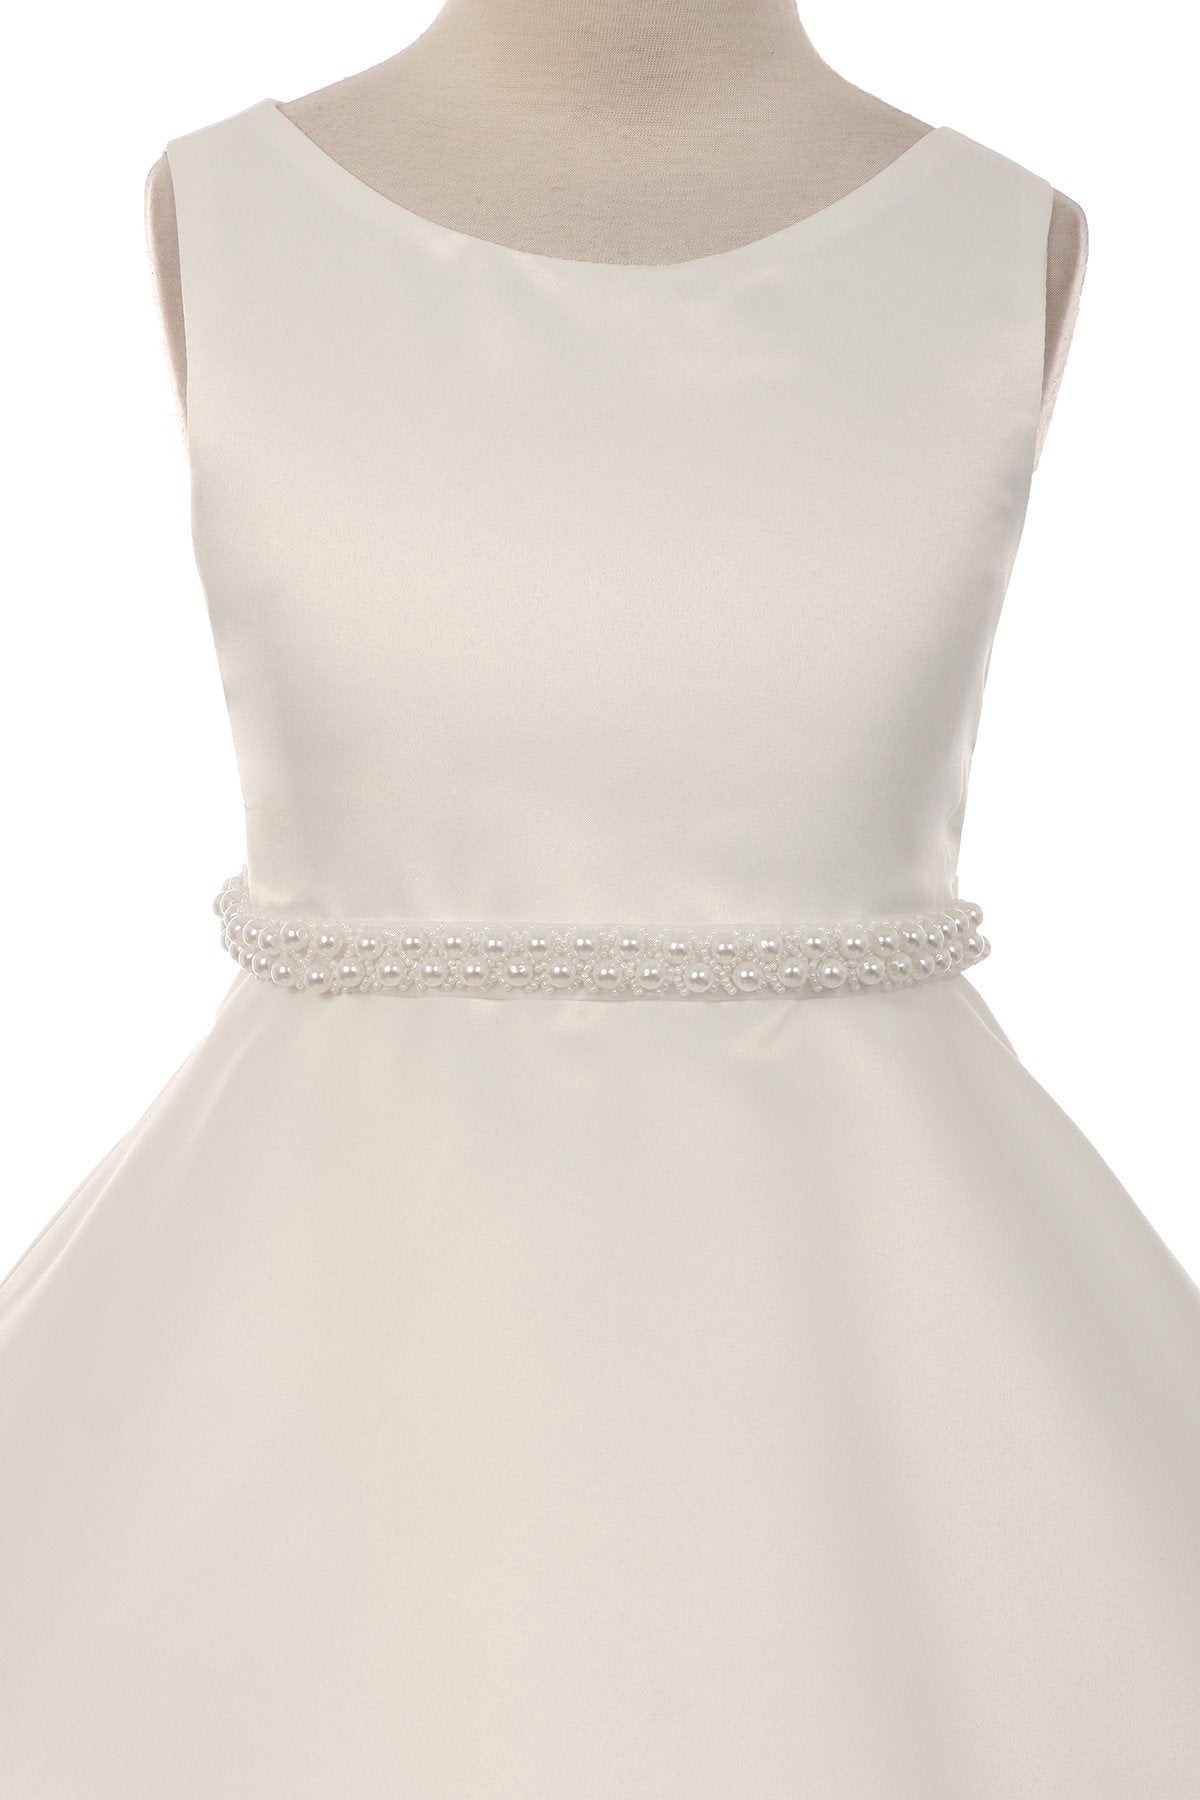 Dress - Long Satin Pearl Trim Communion Dress